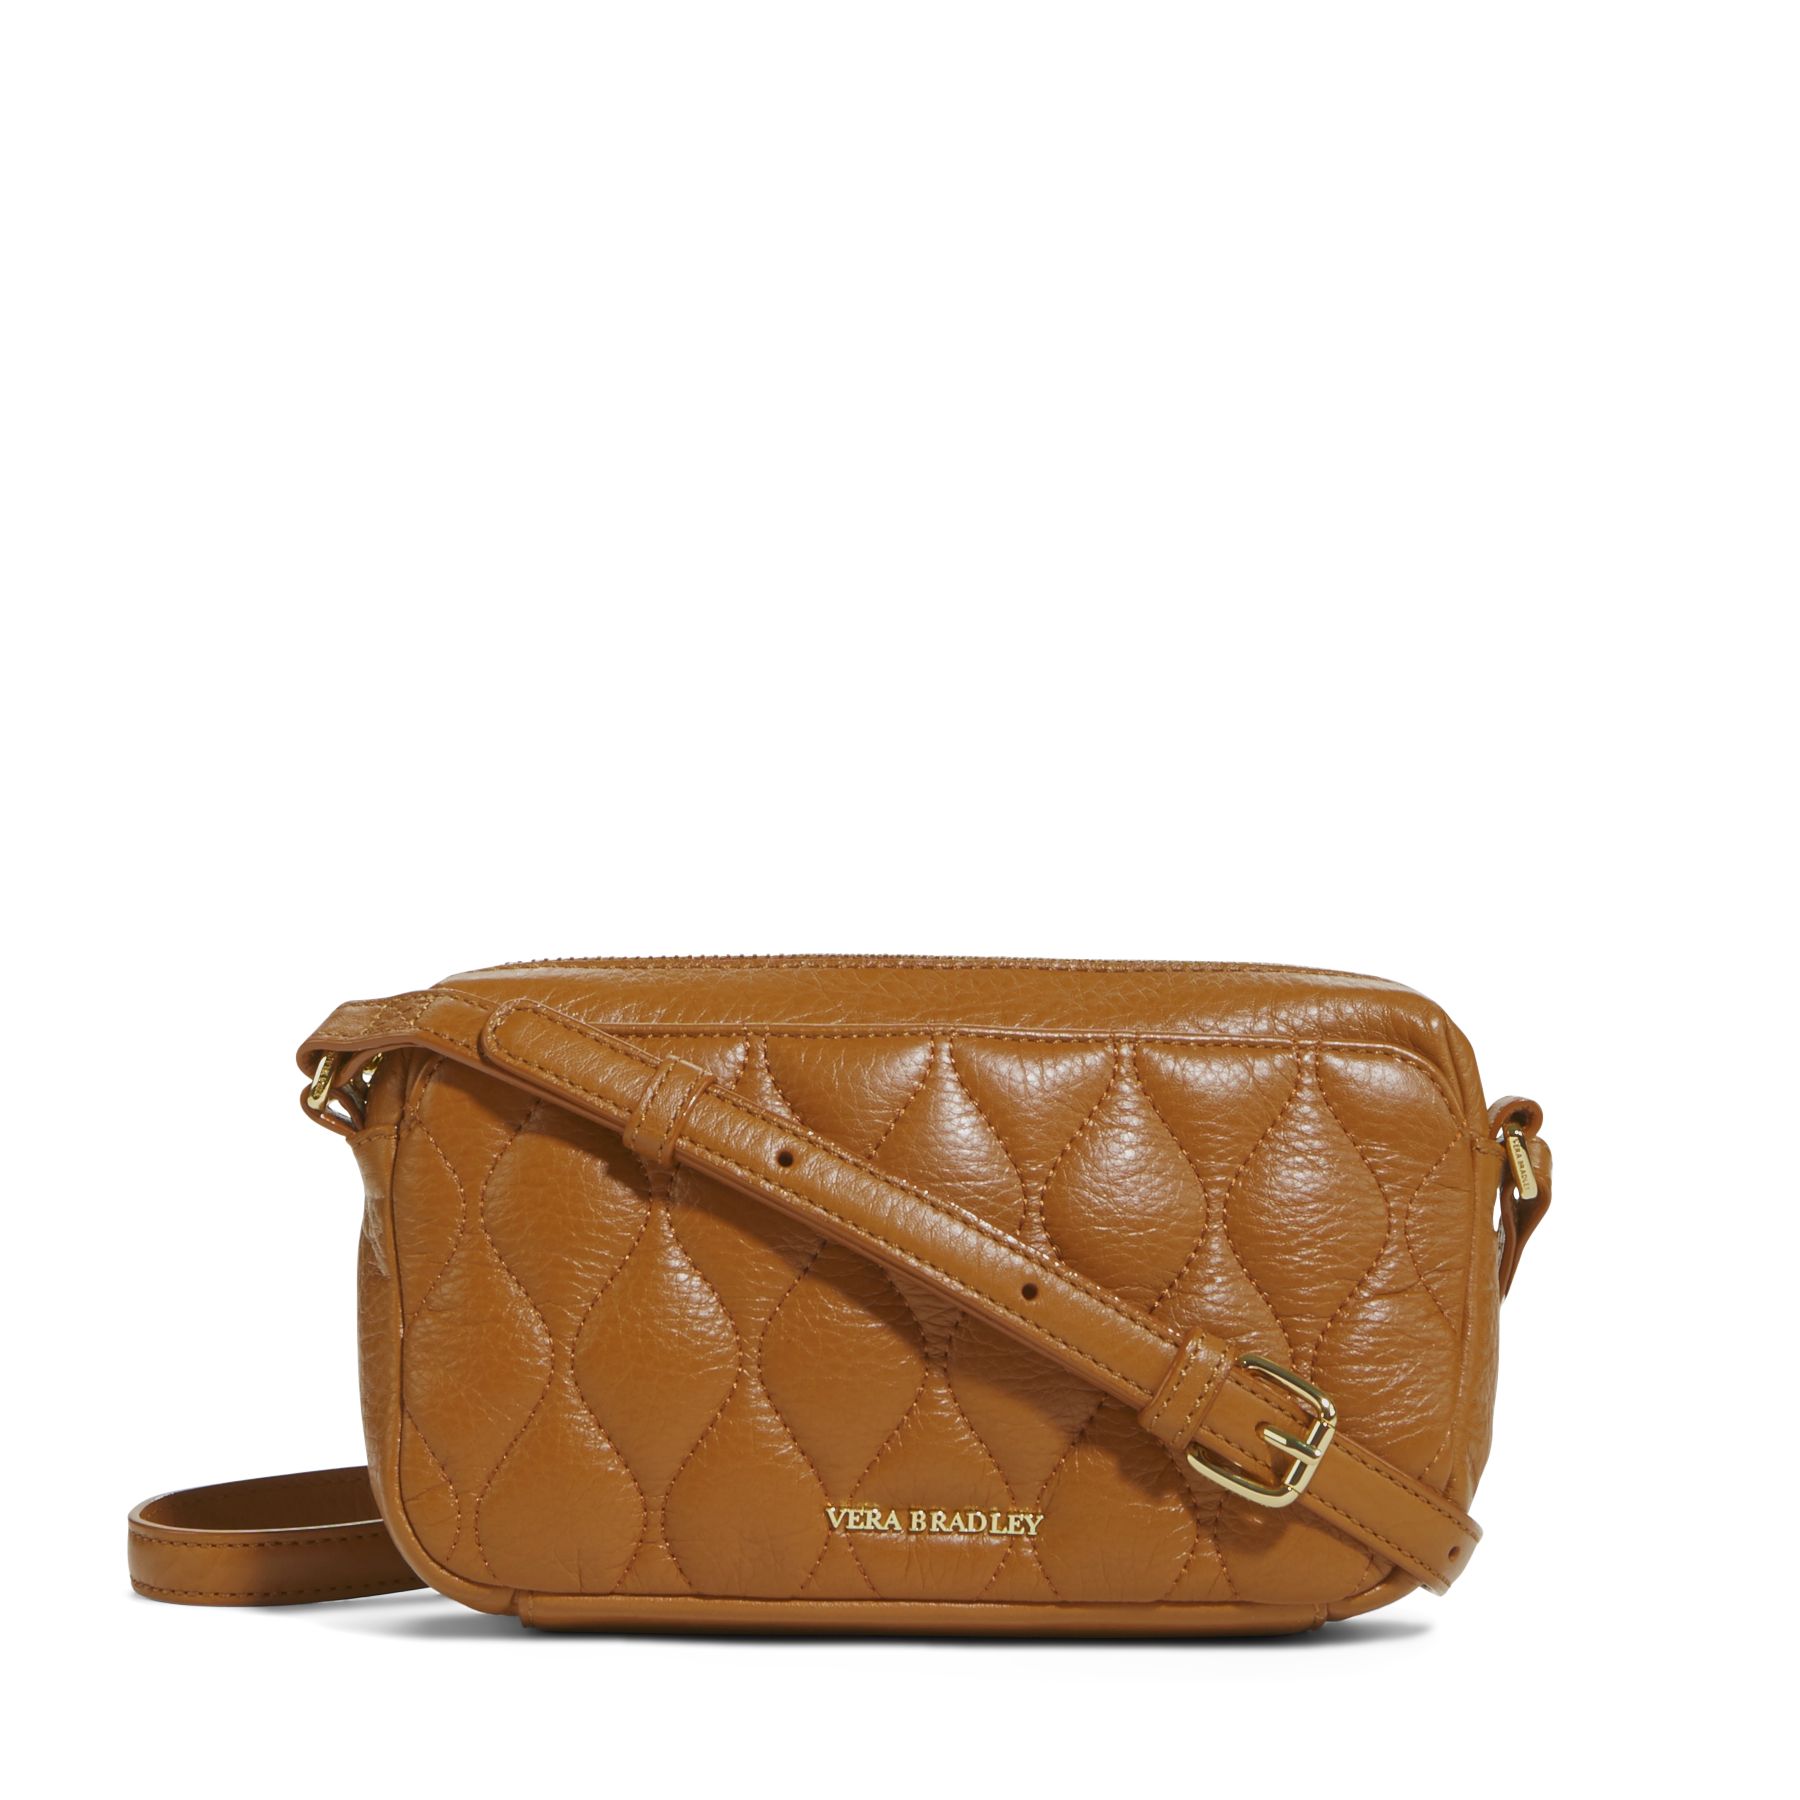 Vera Bradley Quilted Leather Sydney Crossbody Bag | eBay